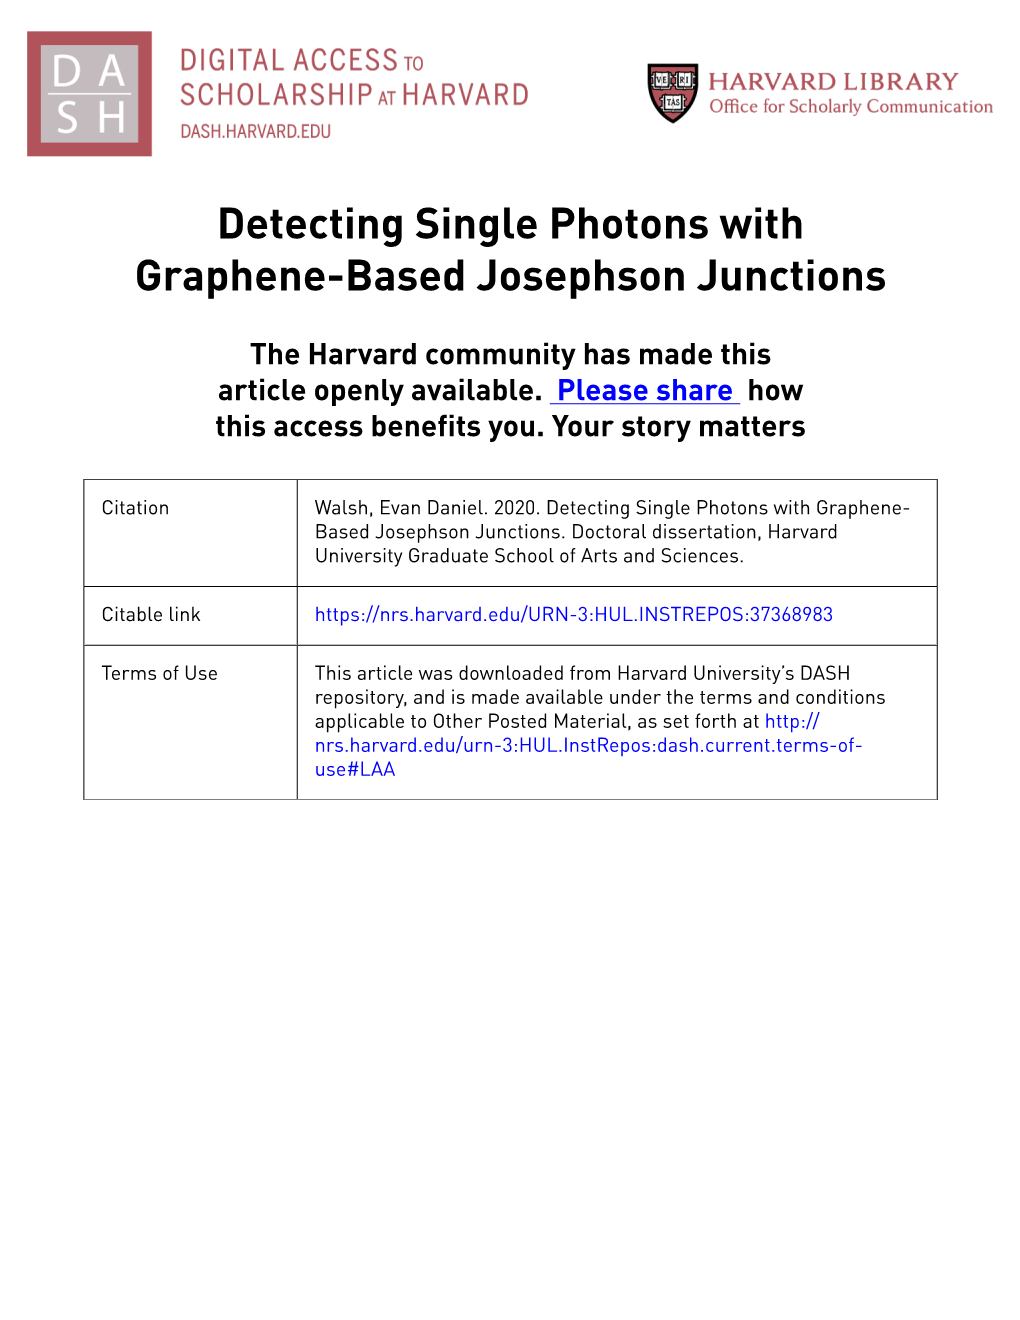 Detecting Single Photons with Graphene-Based Josephson Junctions